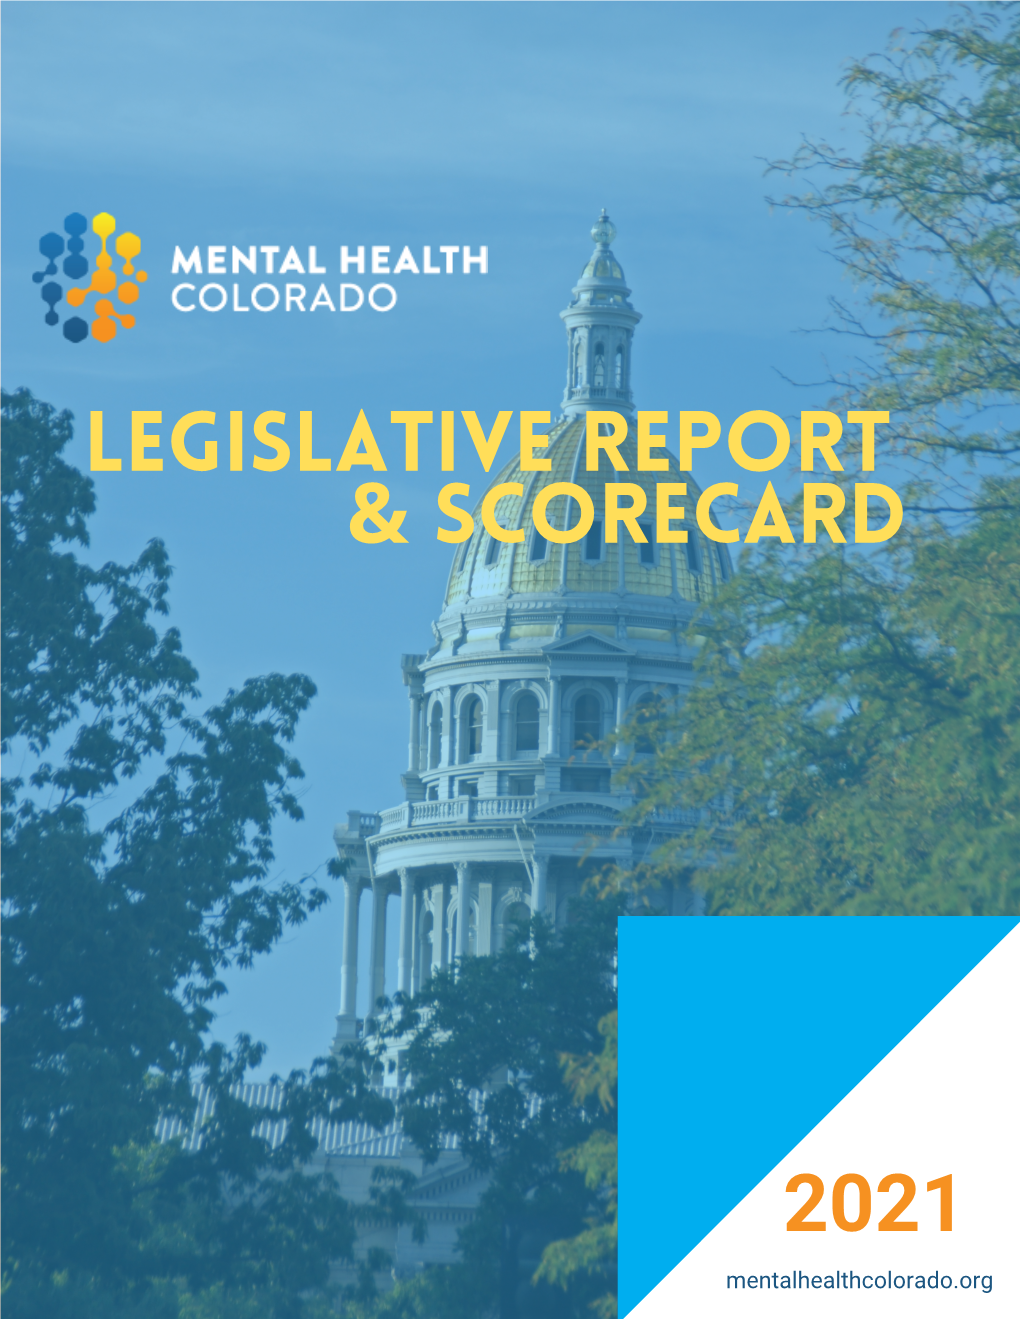 Download the Legislative Report & Scorecard